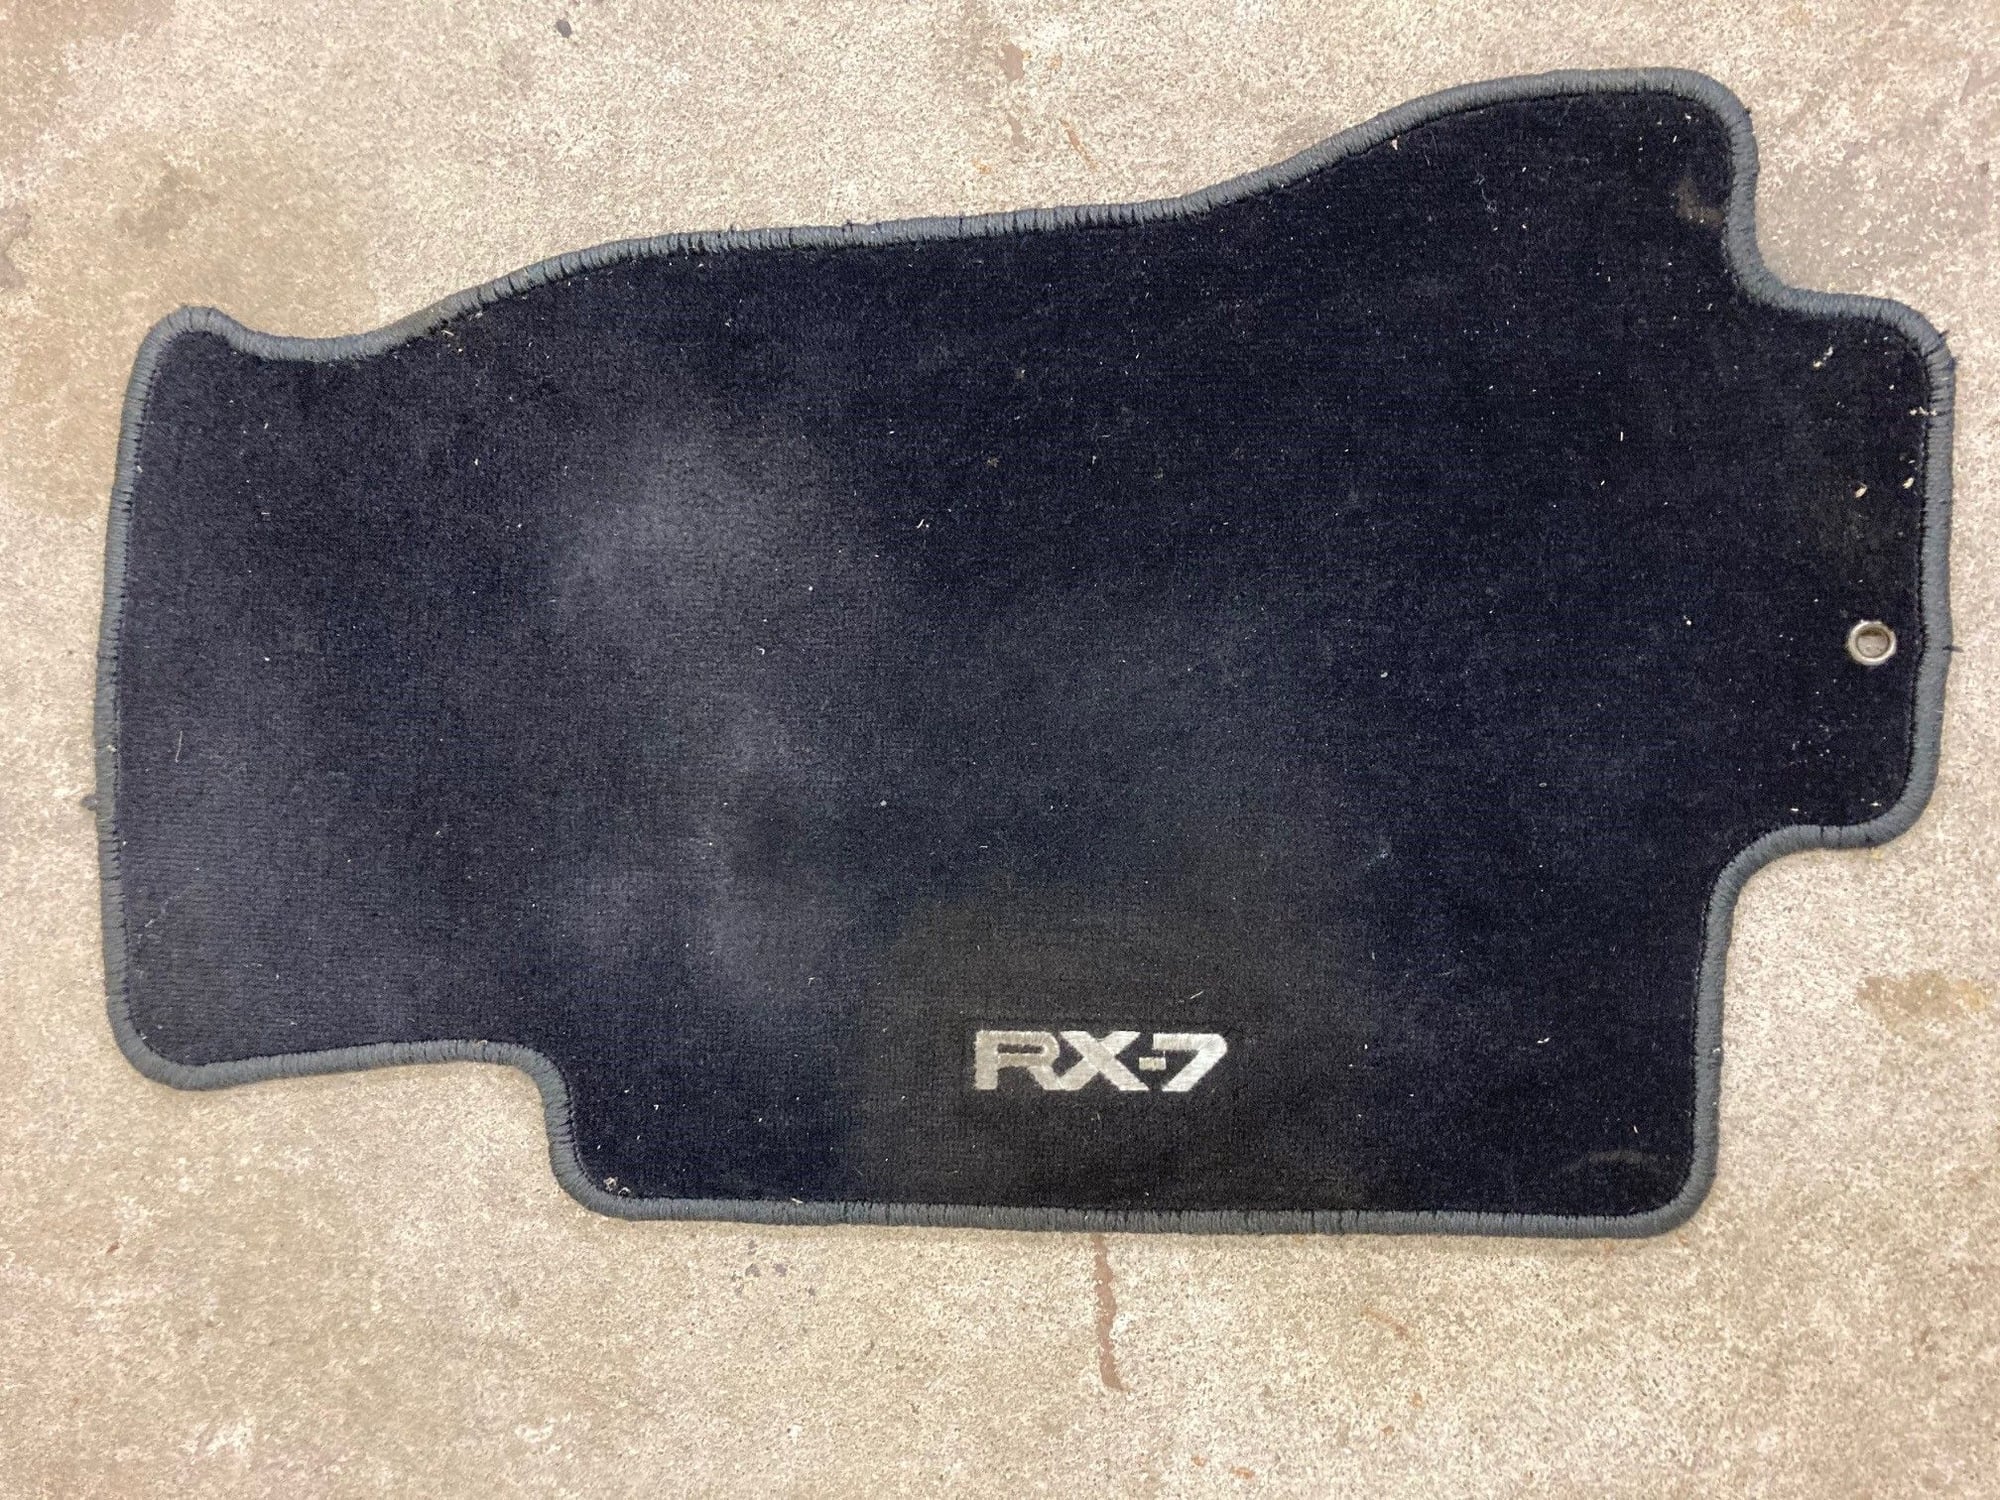 Interior/Upholstery - Black OEM floormats - Used - 1993 to 1995 Mazda RX-7 - Eugene, OR 97404, United States